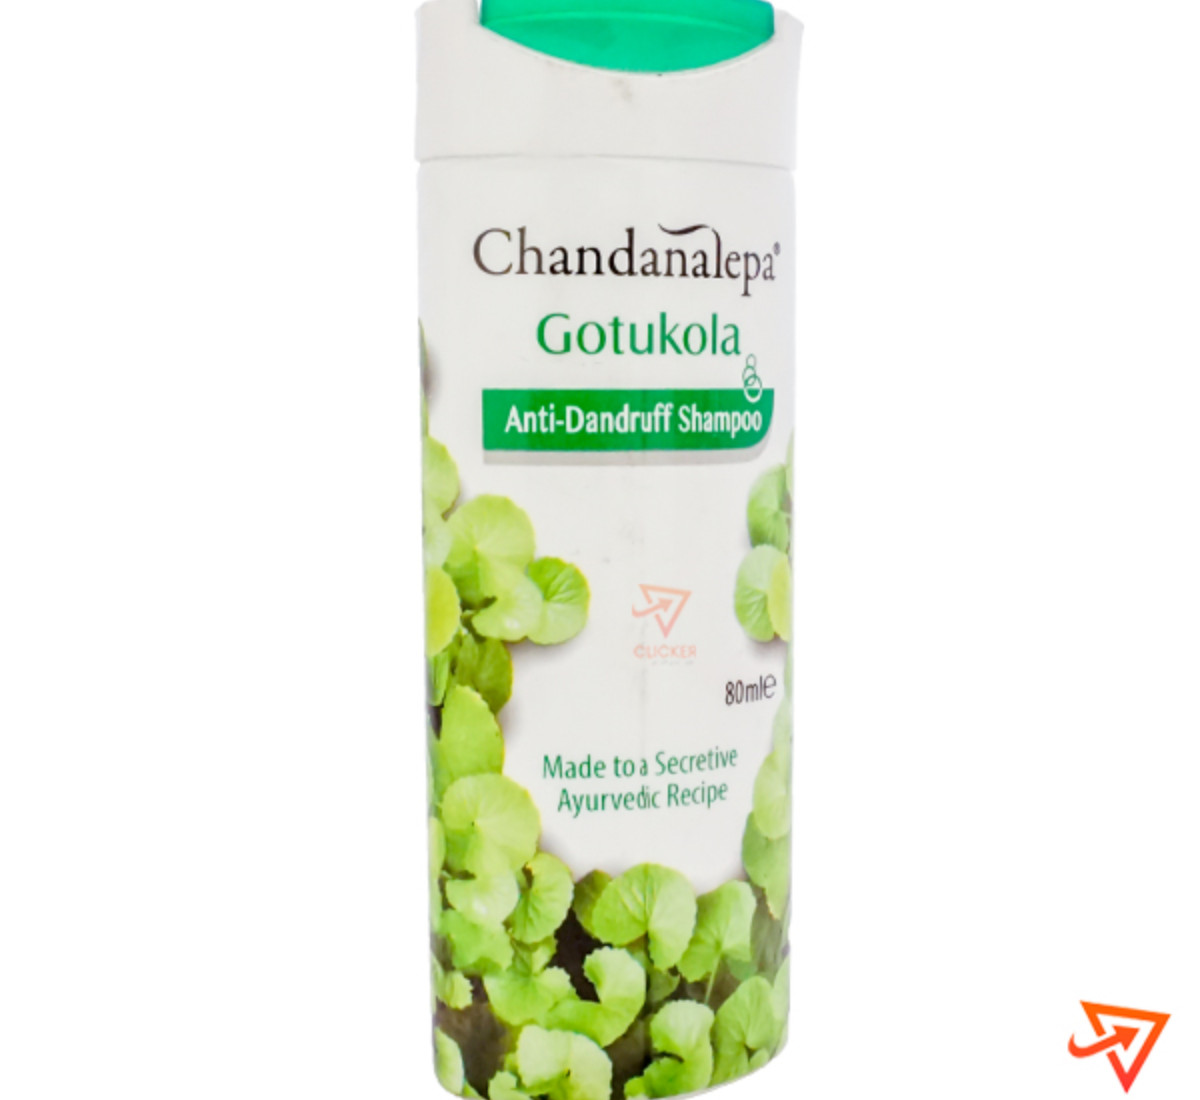 Clicker product 80ml CHANDANALEPA gotukola anti-dandruff shampoo 1054